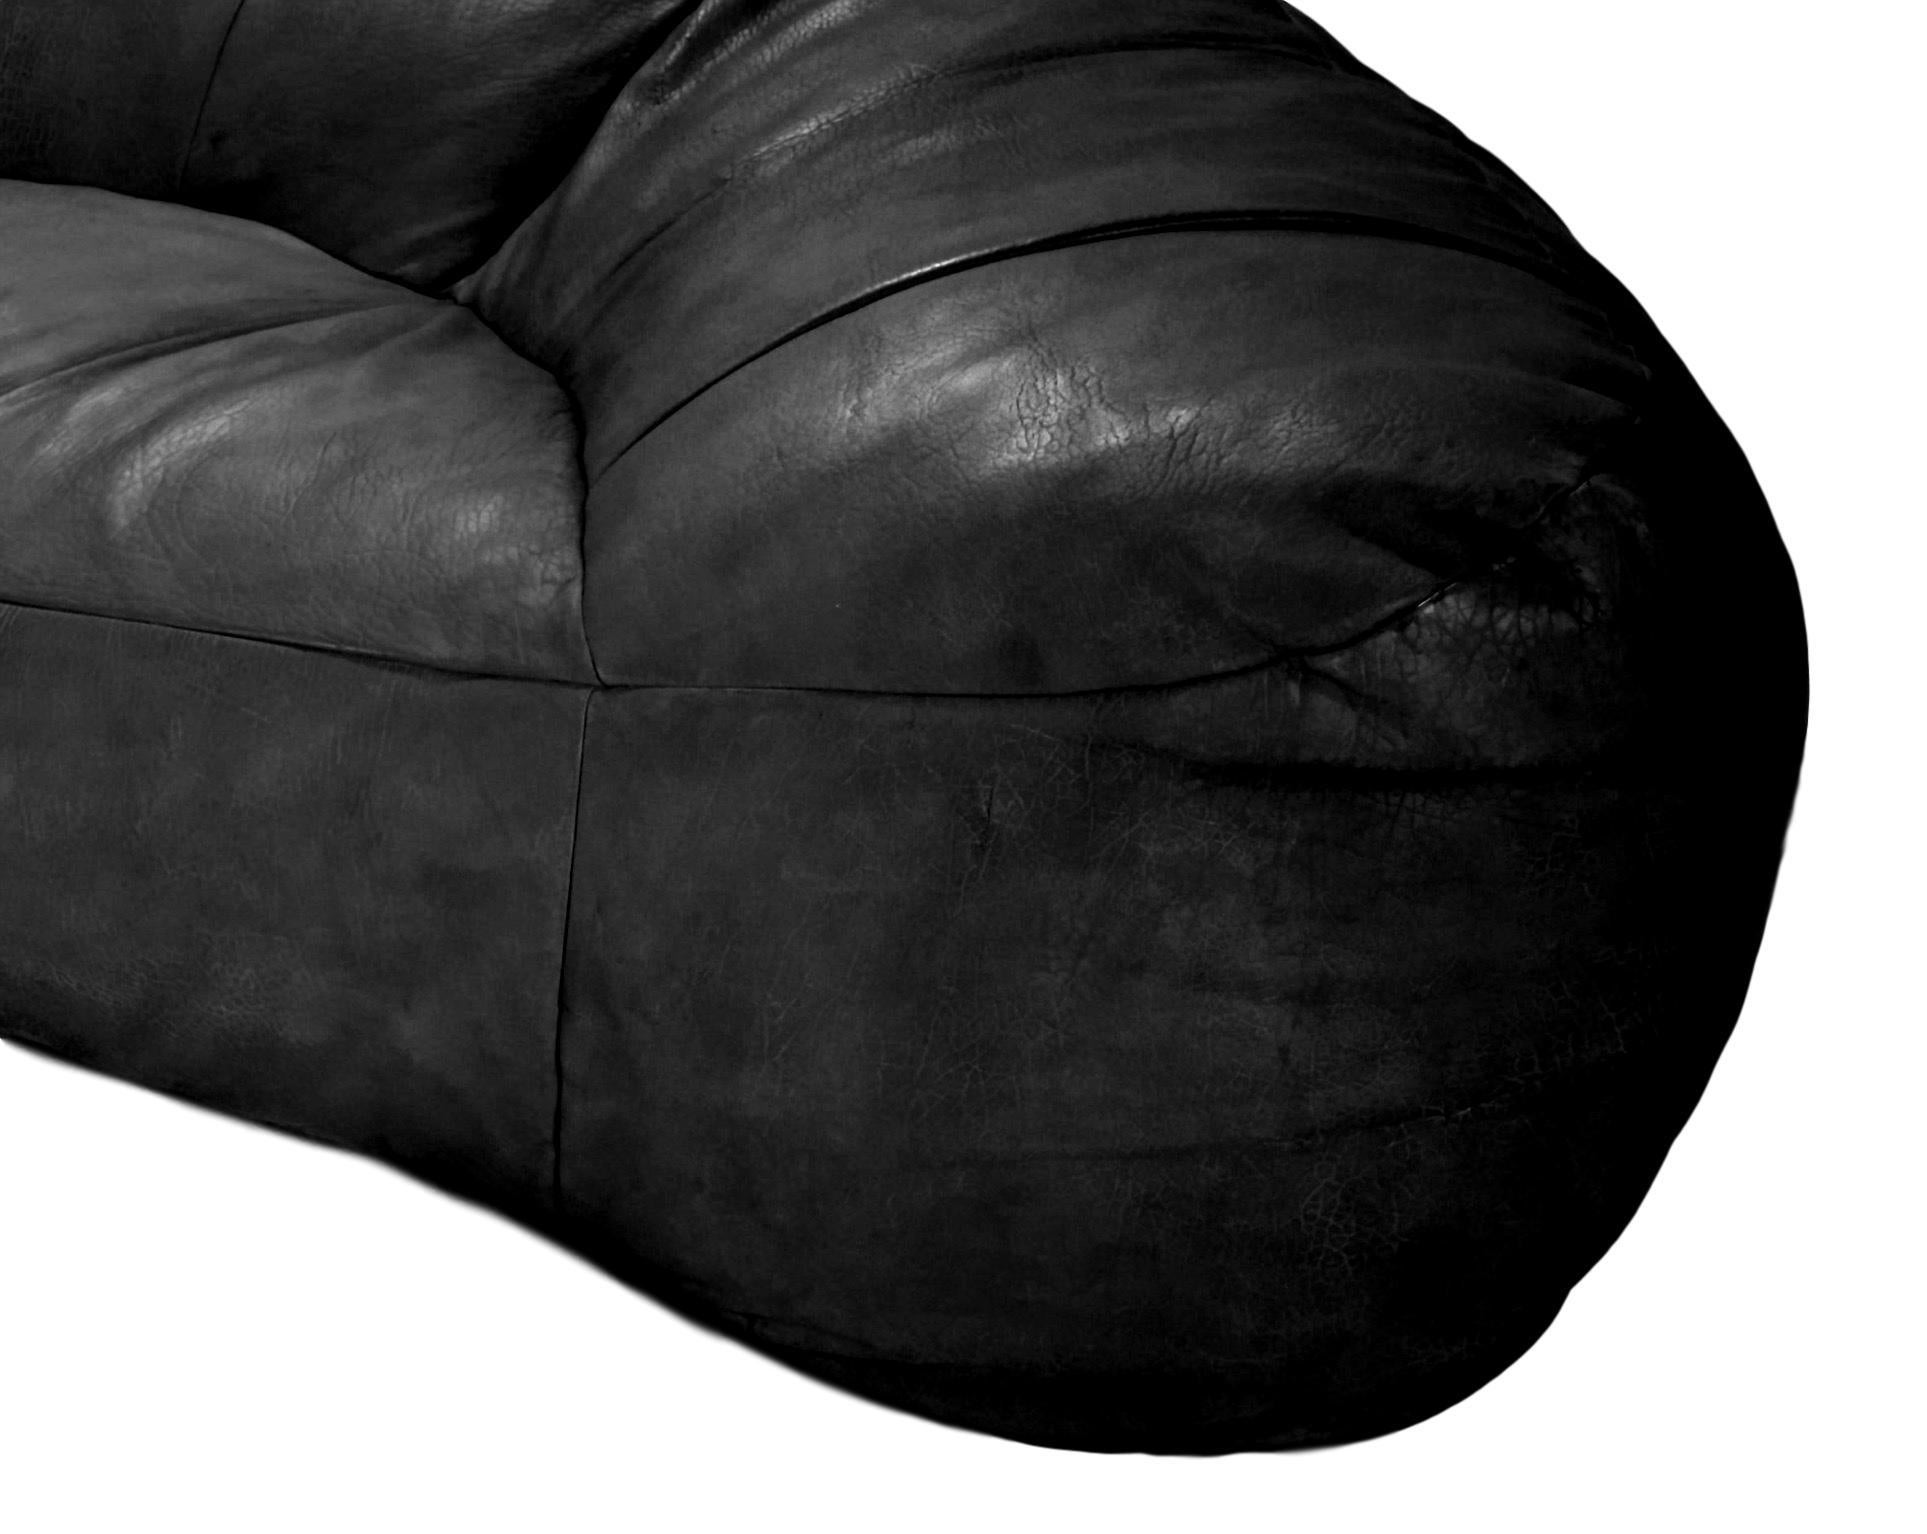 kidney shape sofa